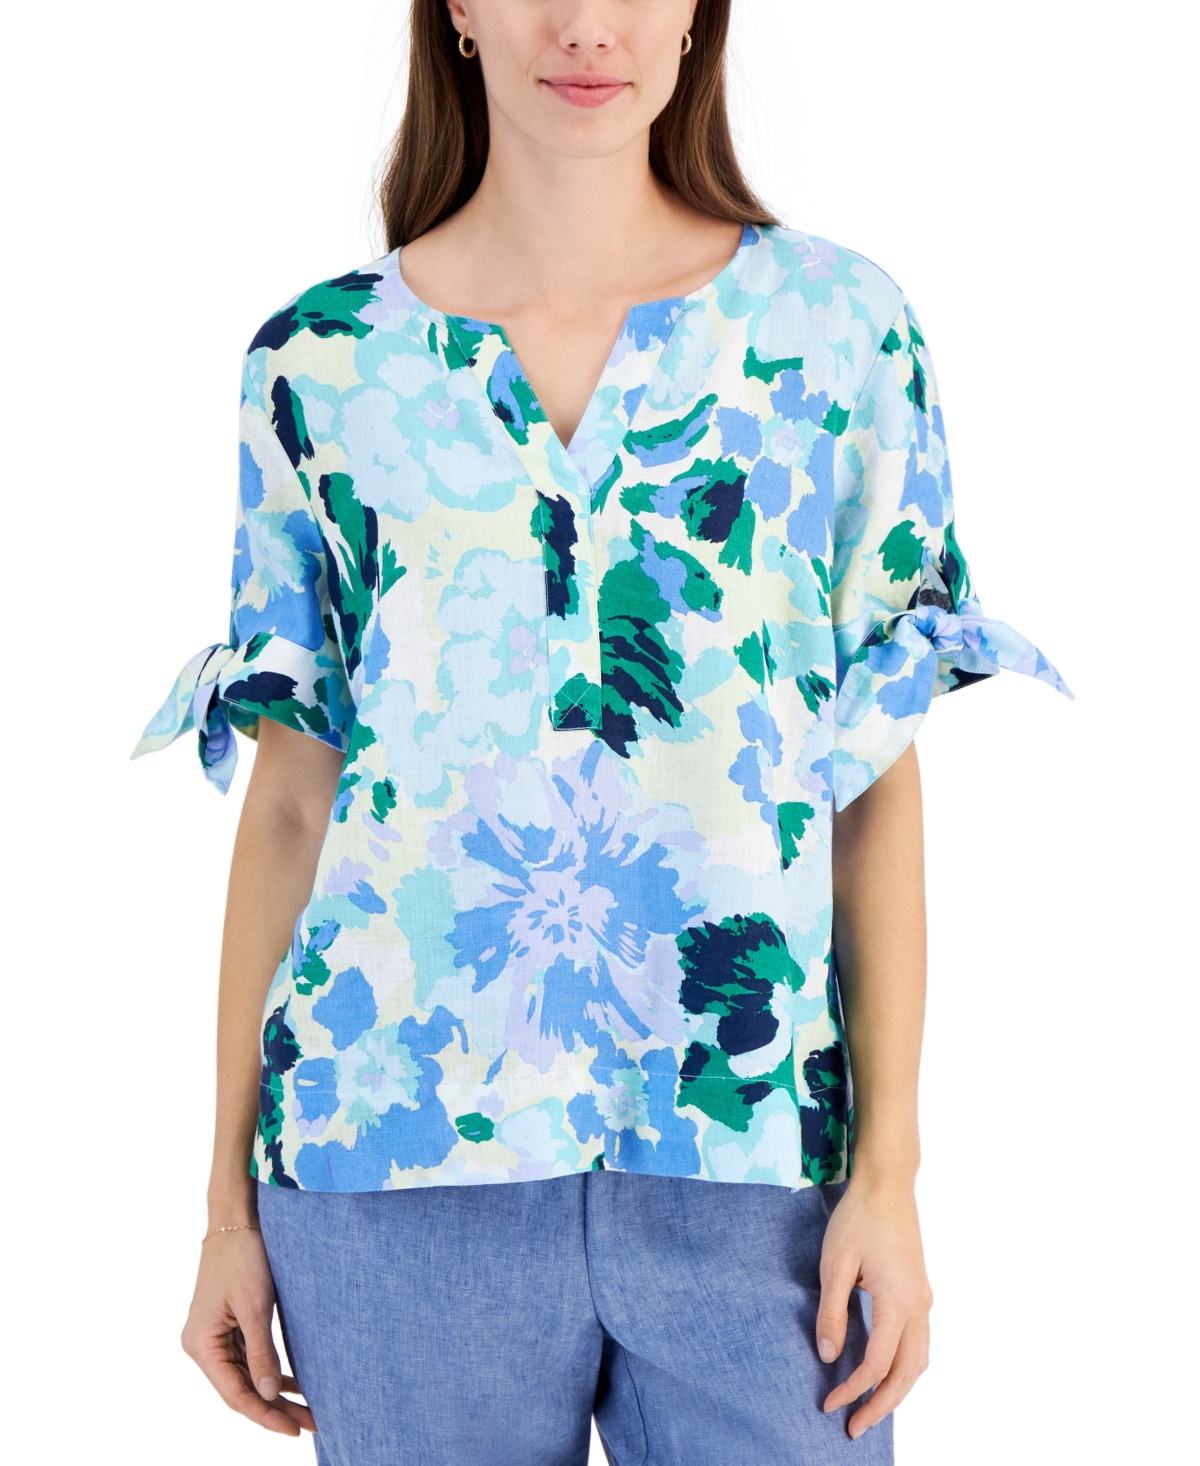 Women's 100% Linen Garden Blur Top, Created for Macy's - Light Pool Blue Combo